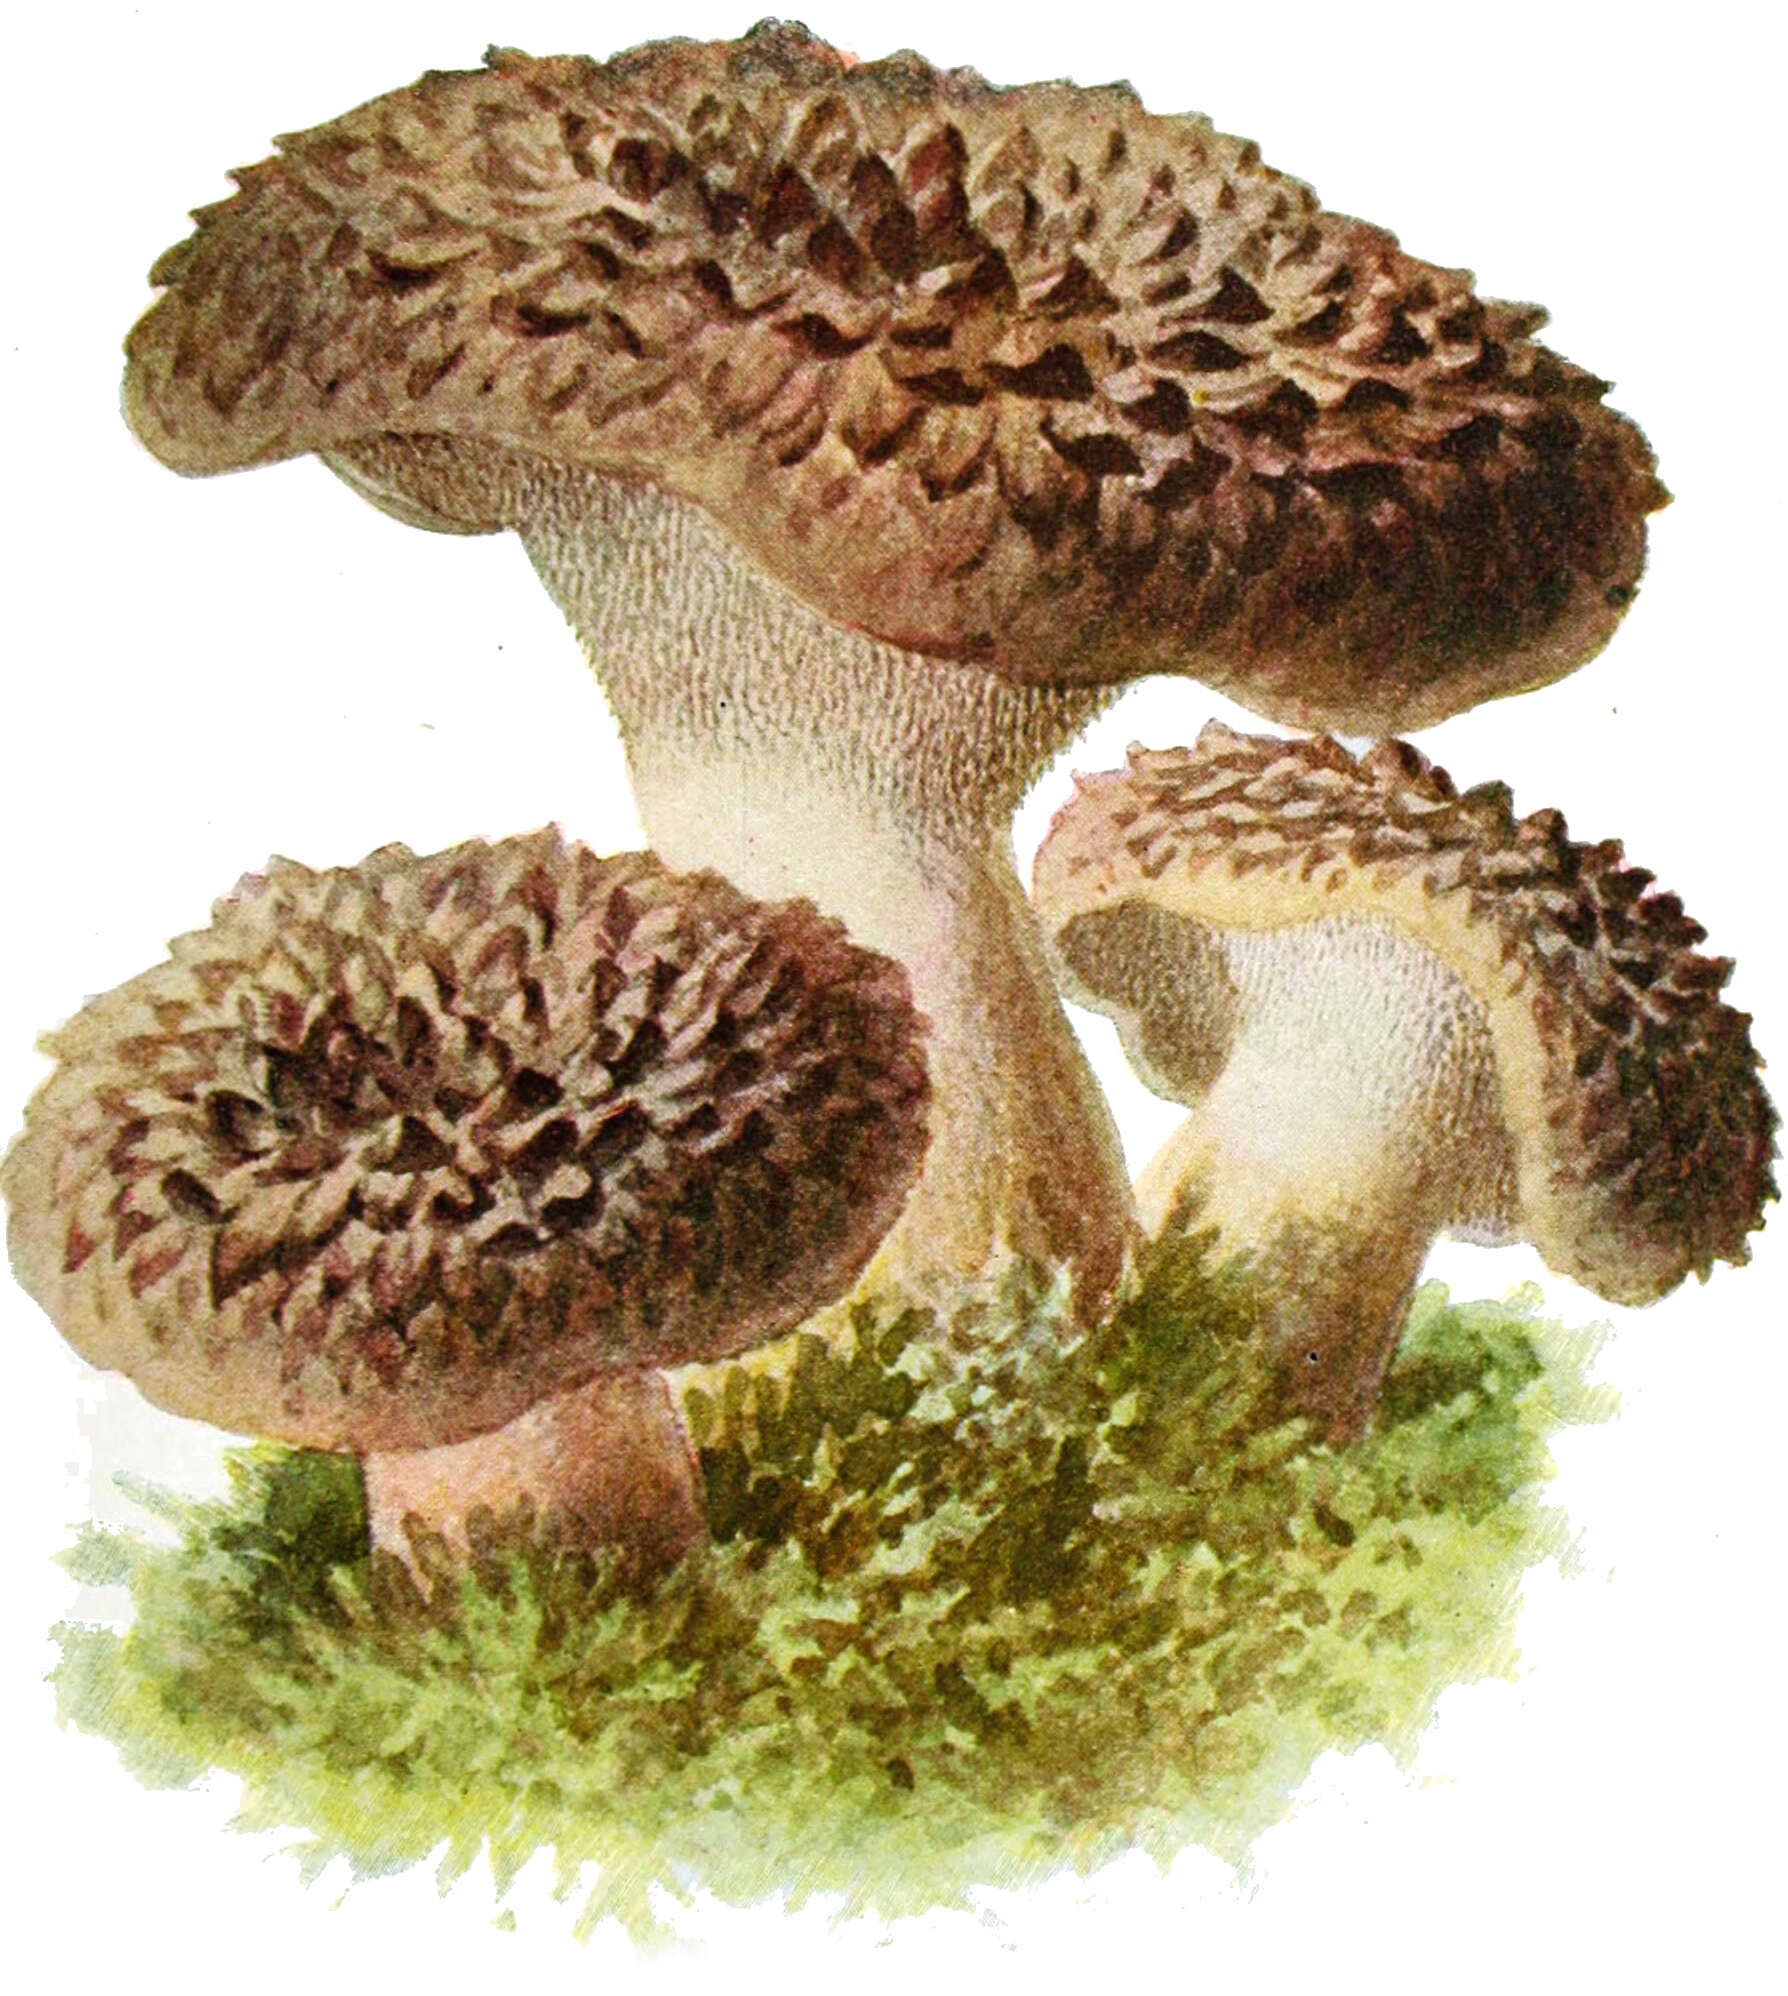 Image de Sarcodon imbricatus (L.) P. Karst. 1881